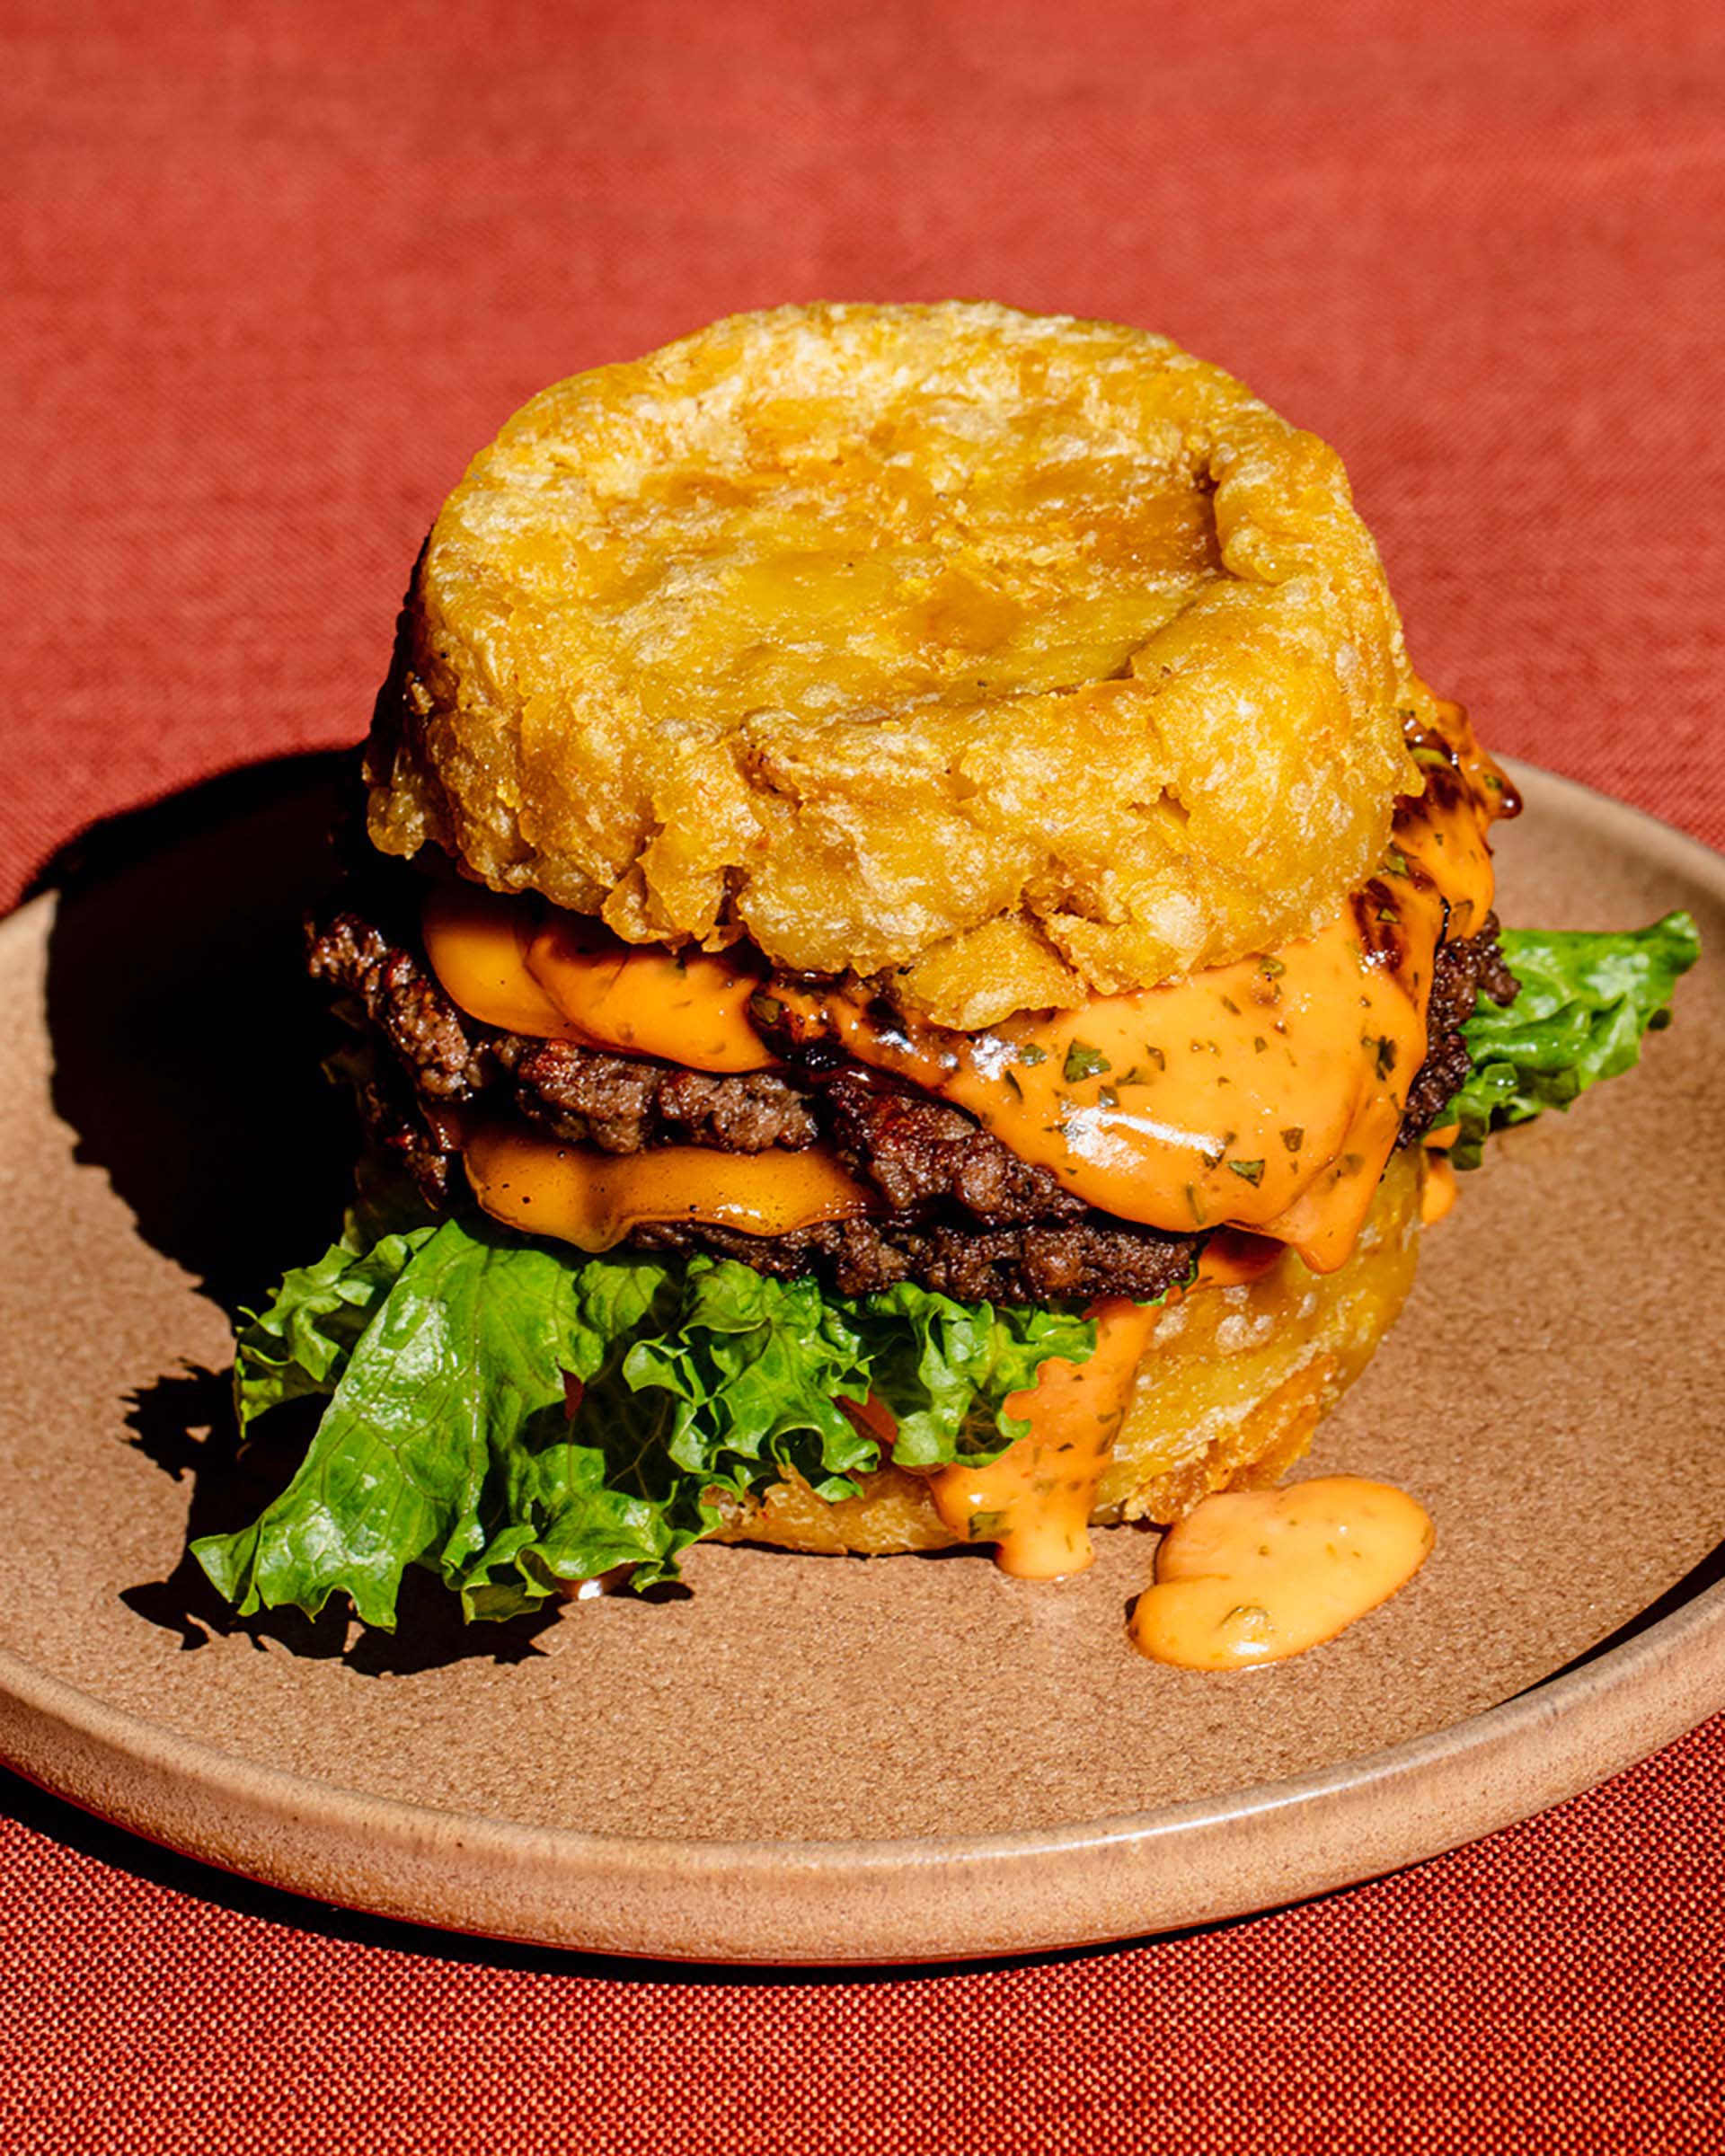 Un hamburger vegano con mofongo (purè di banane fritte) che funge da panino.